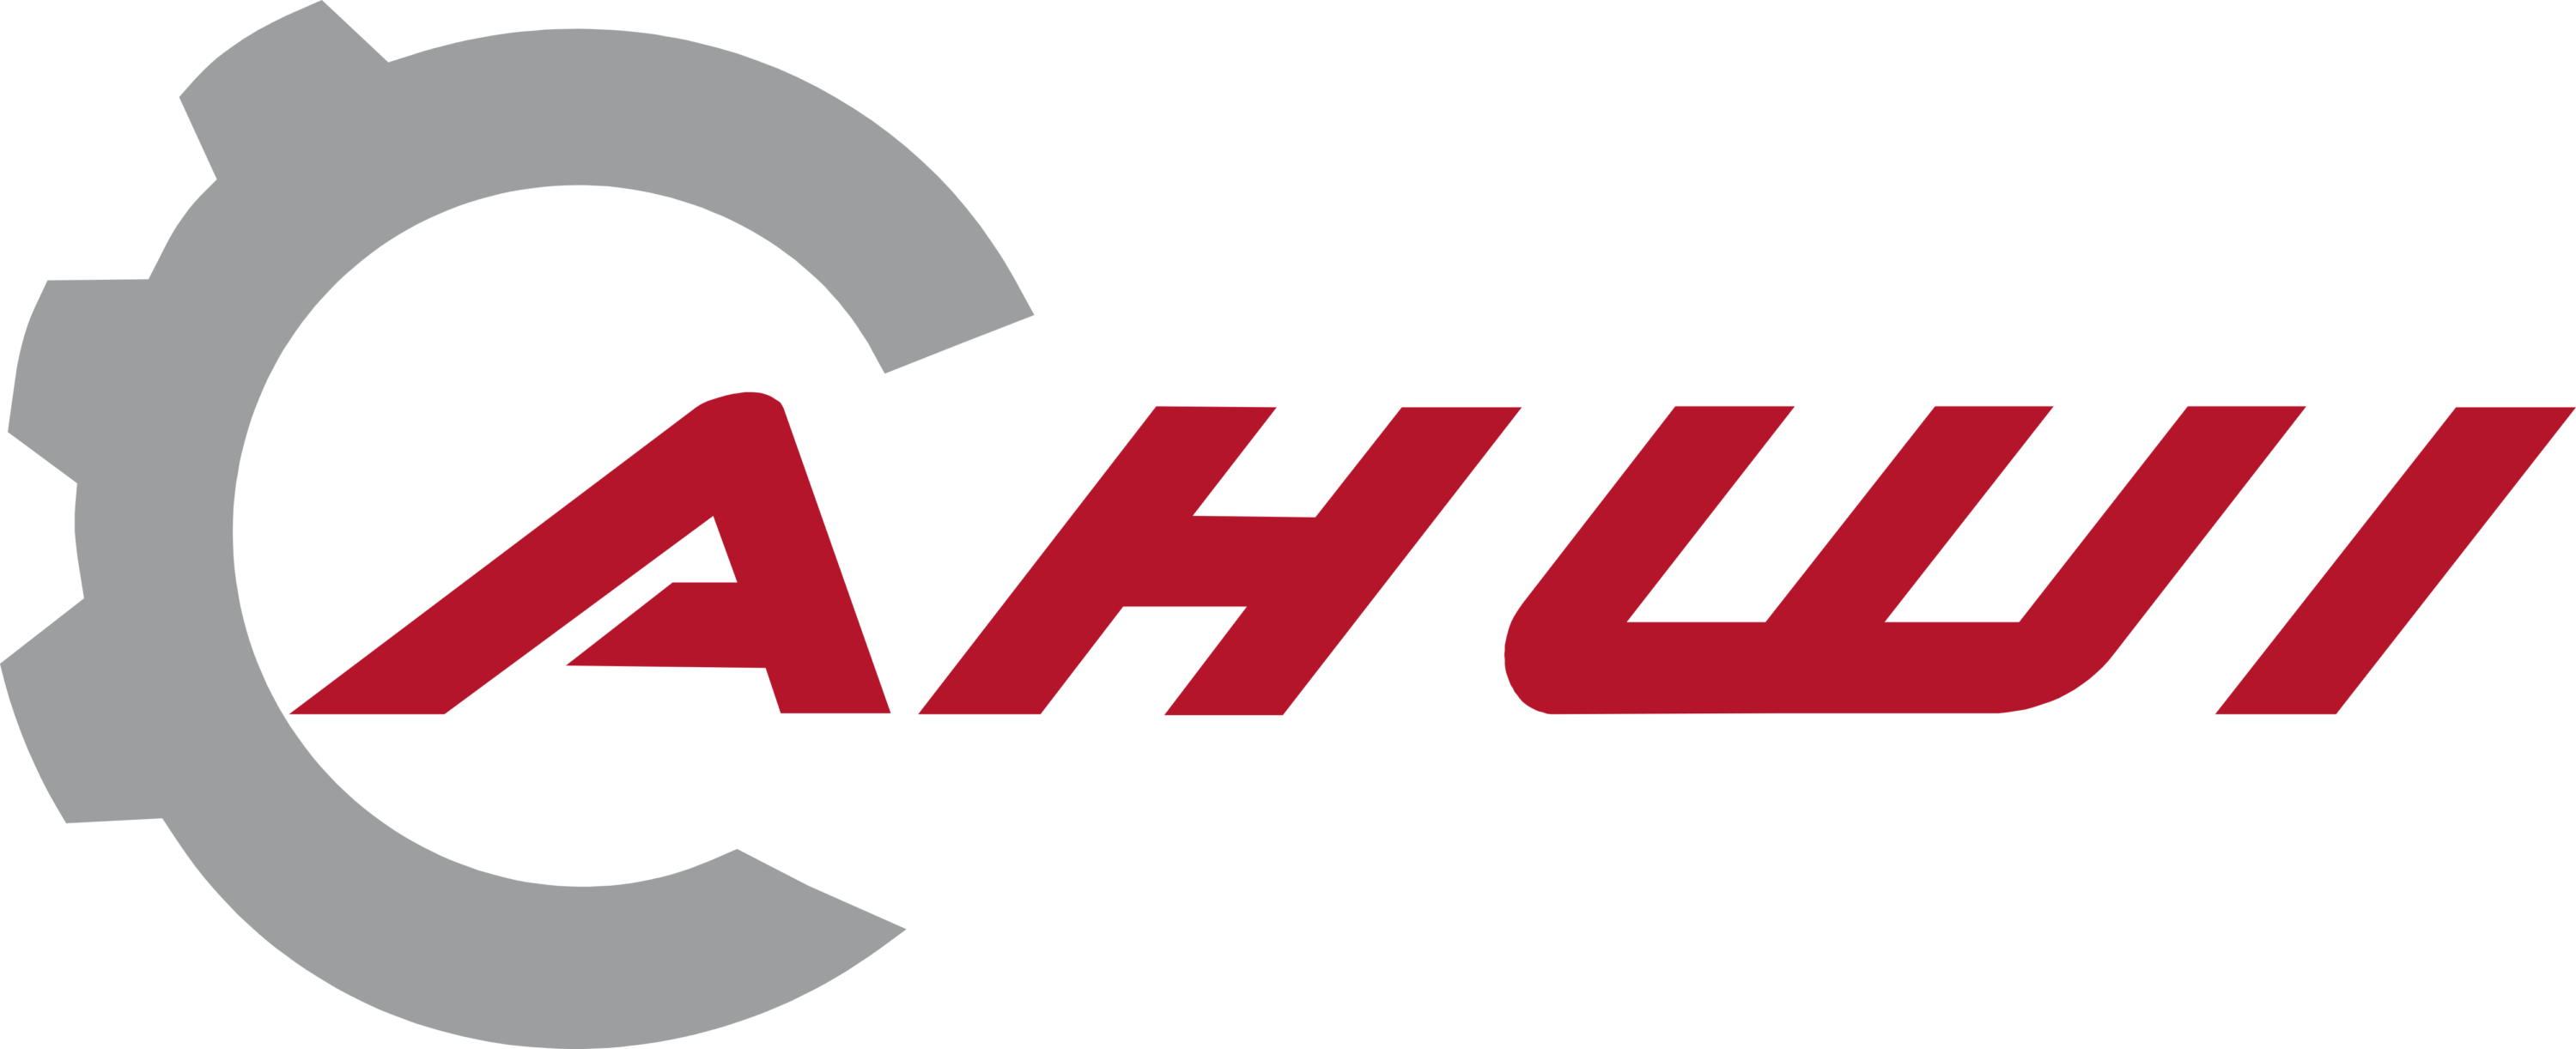 AHWI Maschinenbau Logo